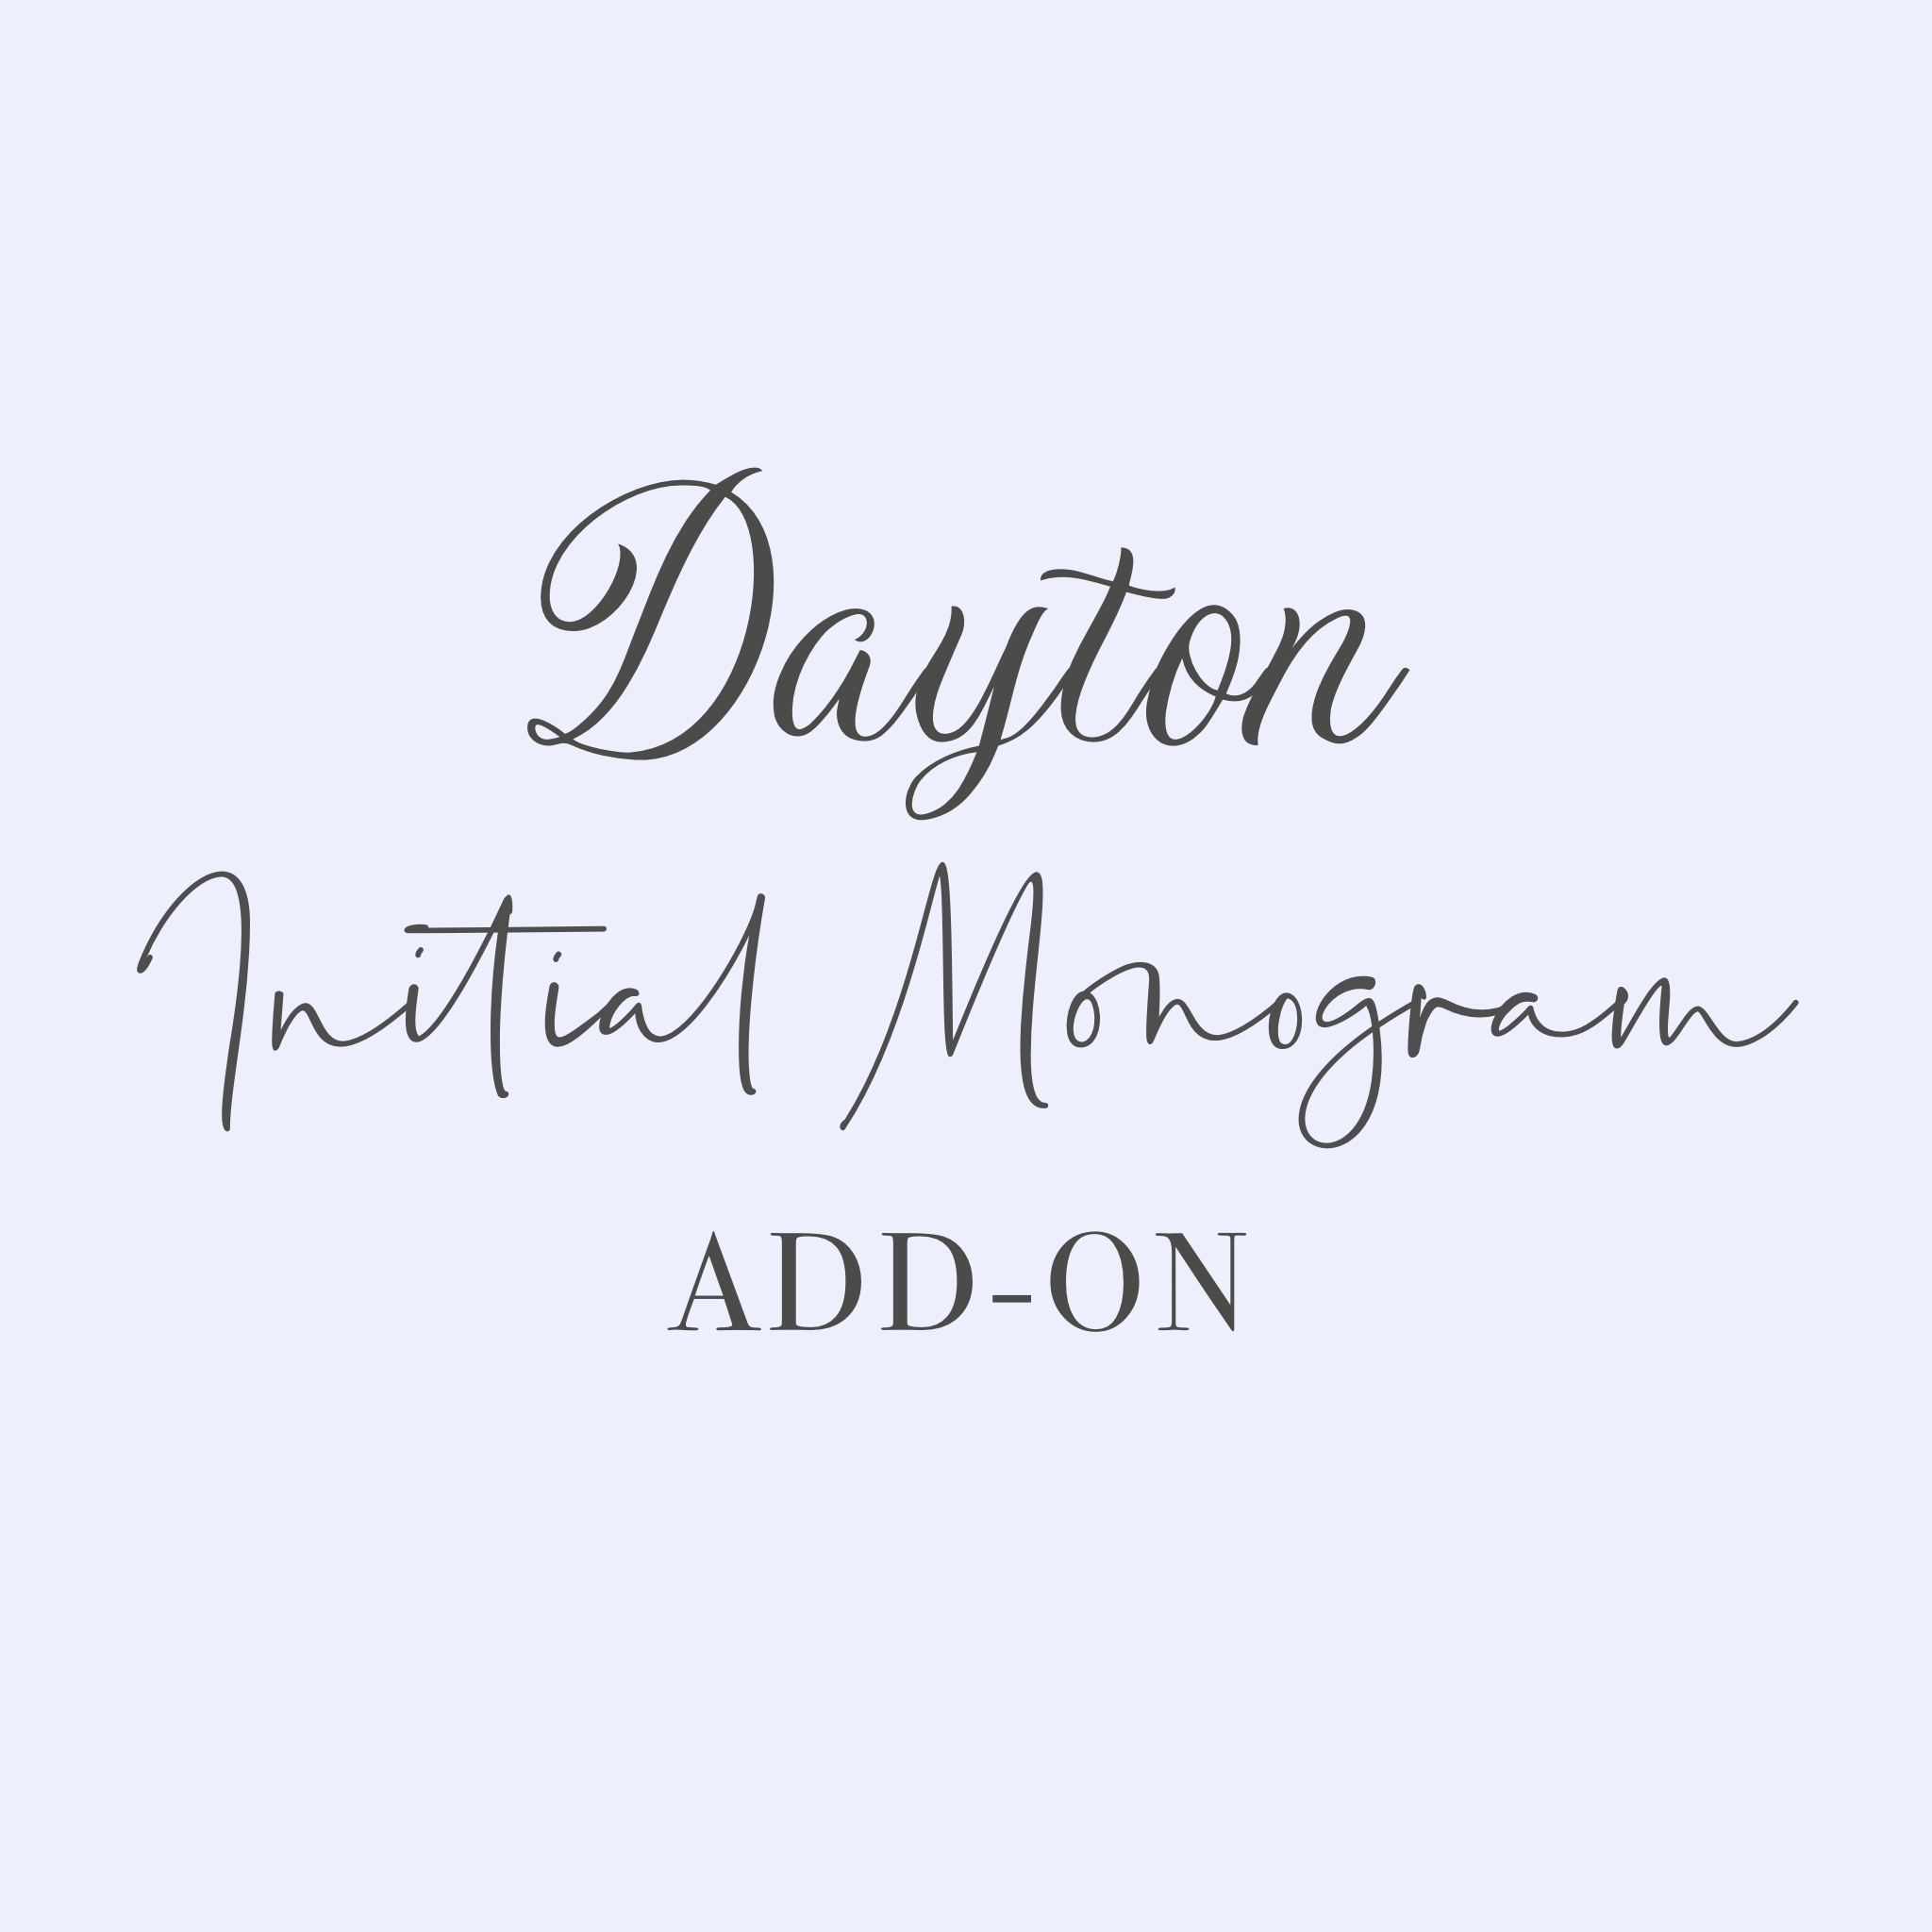 Dayton Initial Monogram Add-On